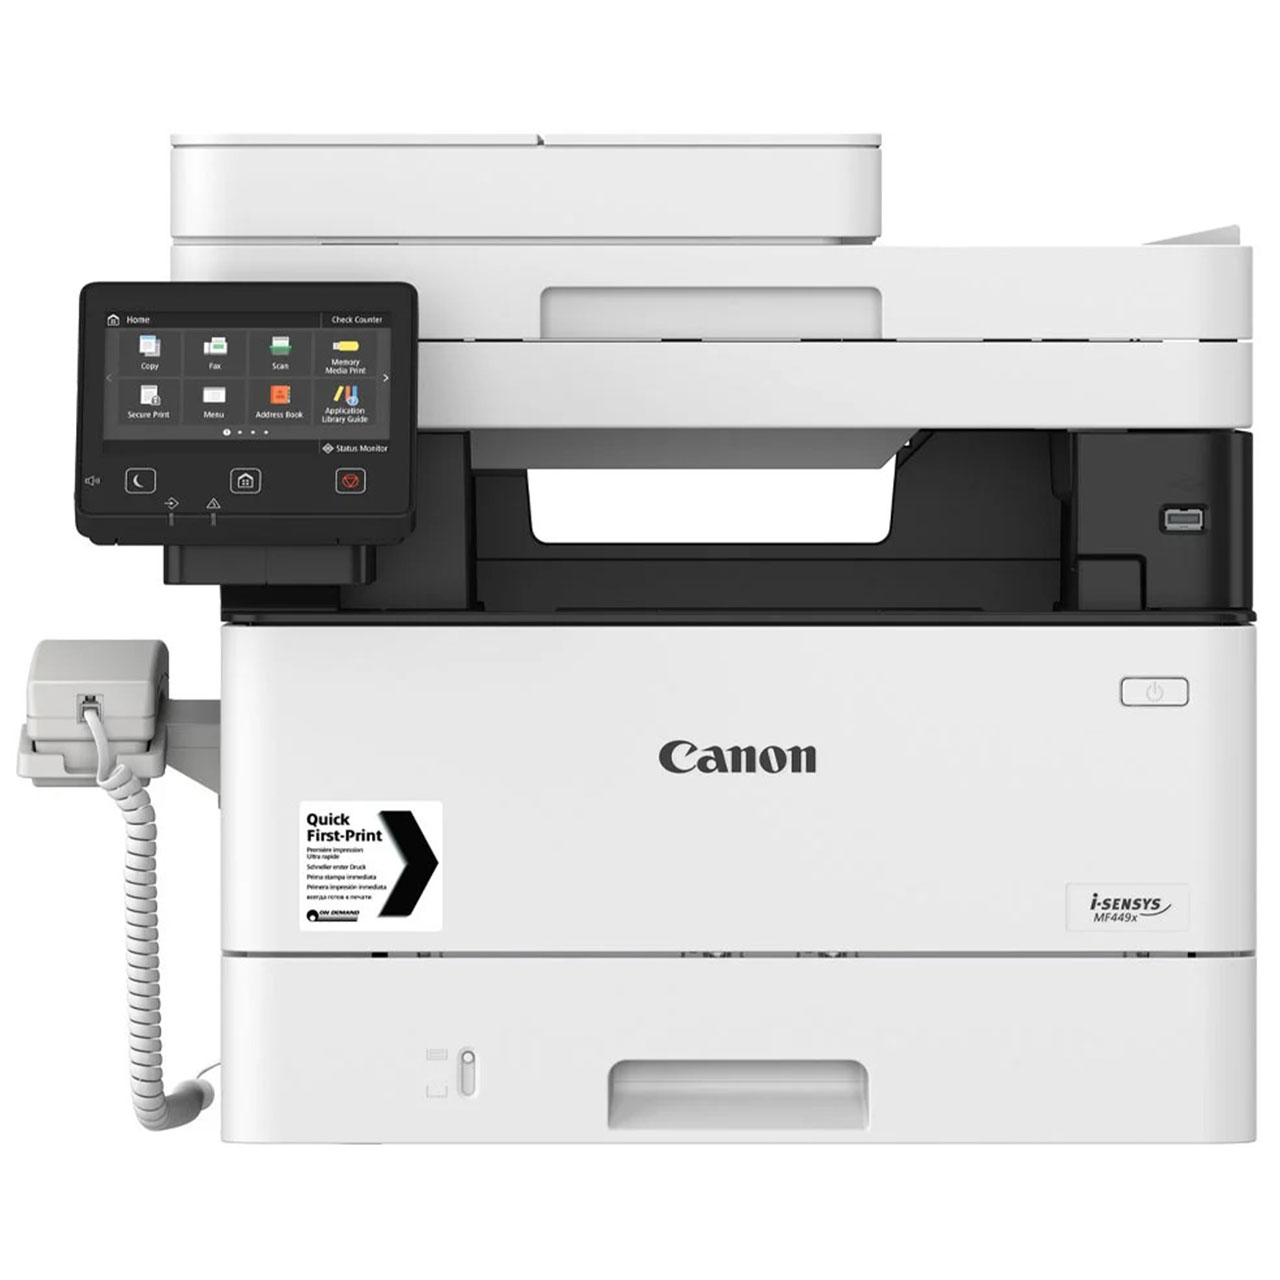 Toner cartridge compatible with Canon i-SENSYS MF449x